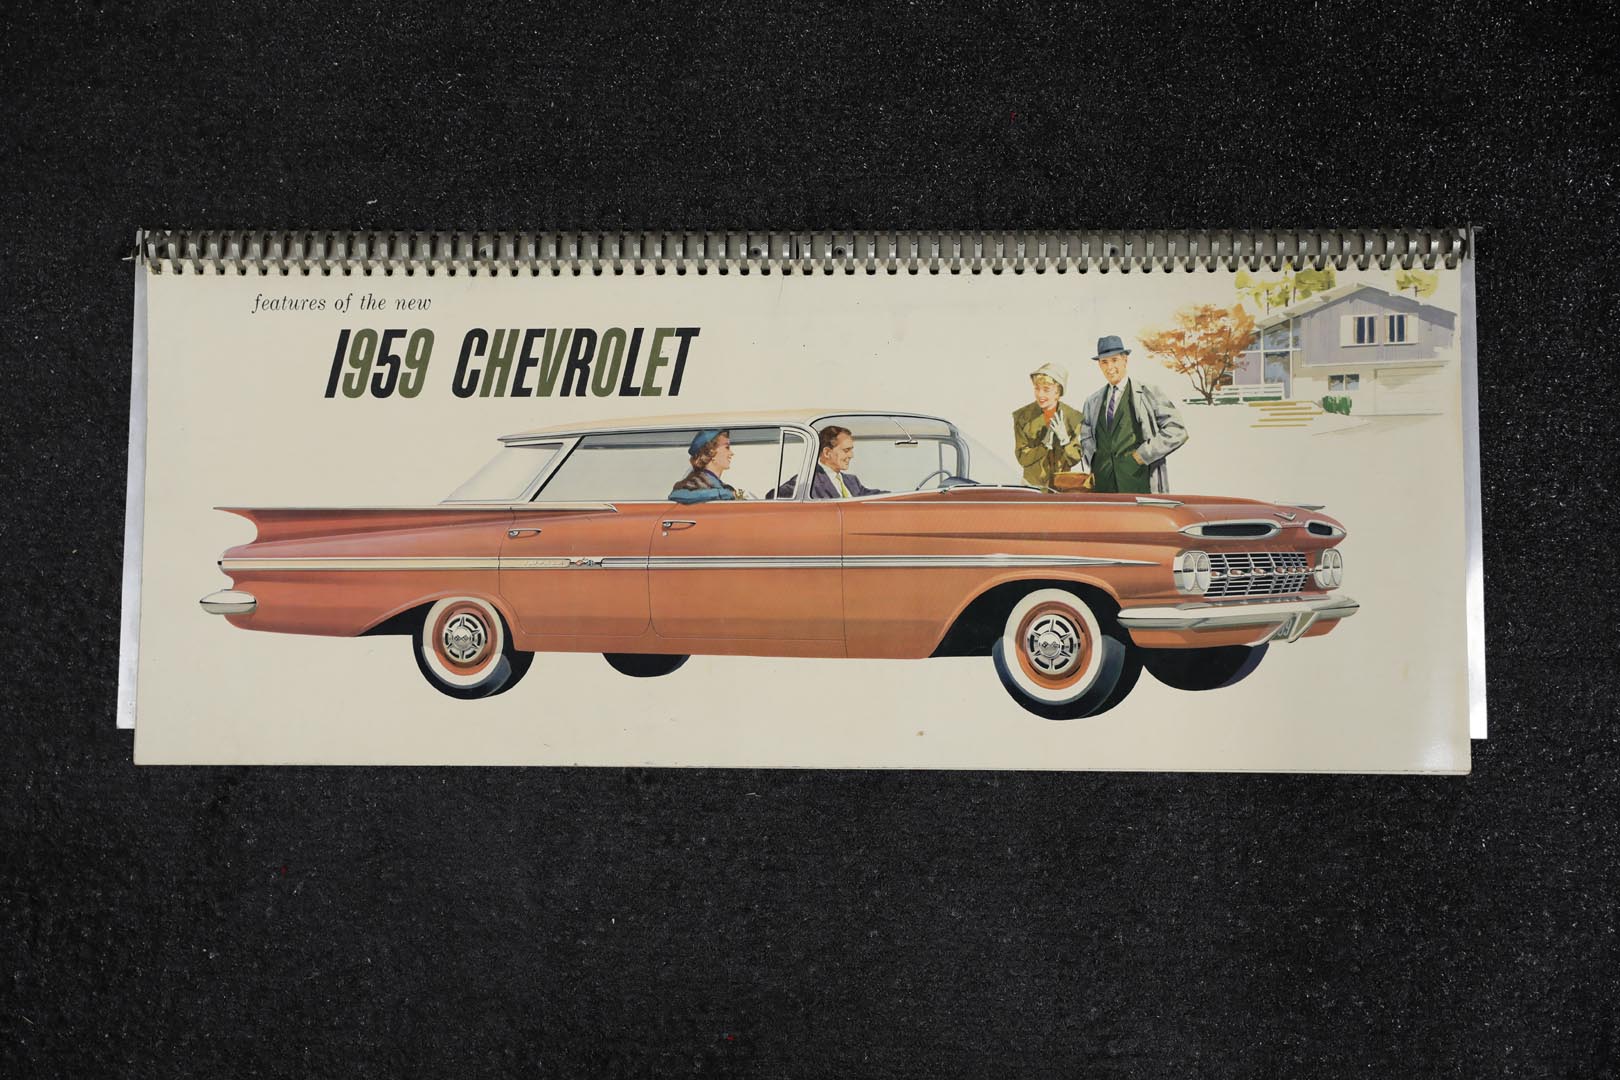 1959 Chevrolet Automobile Features Showroom Display